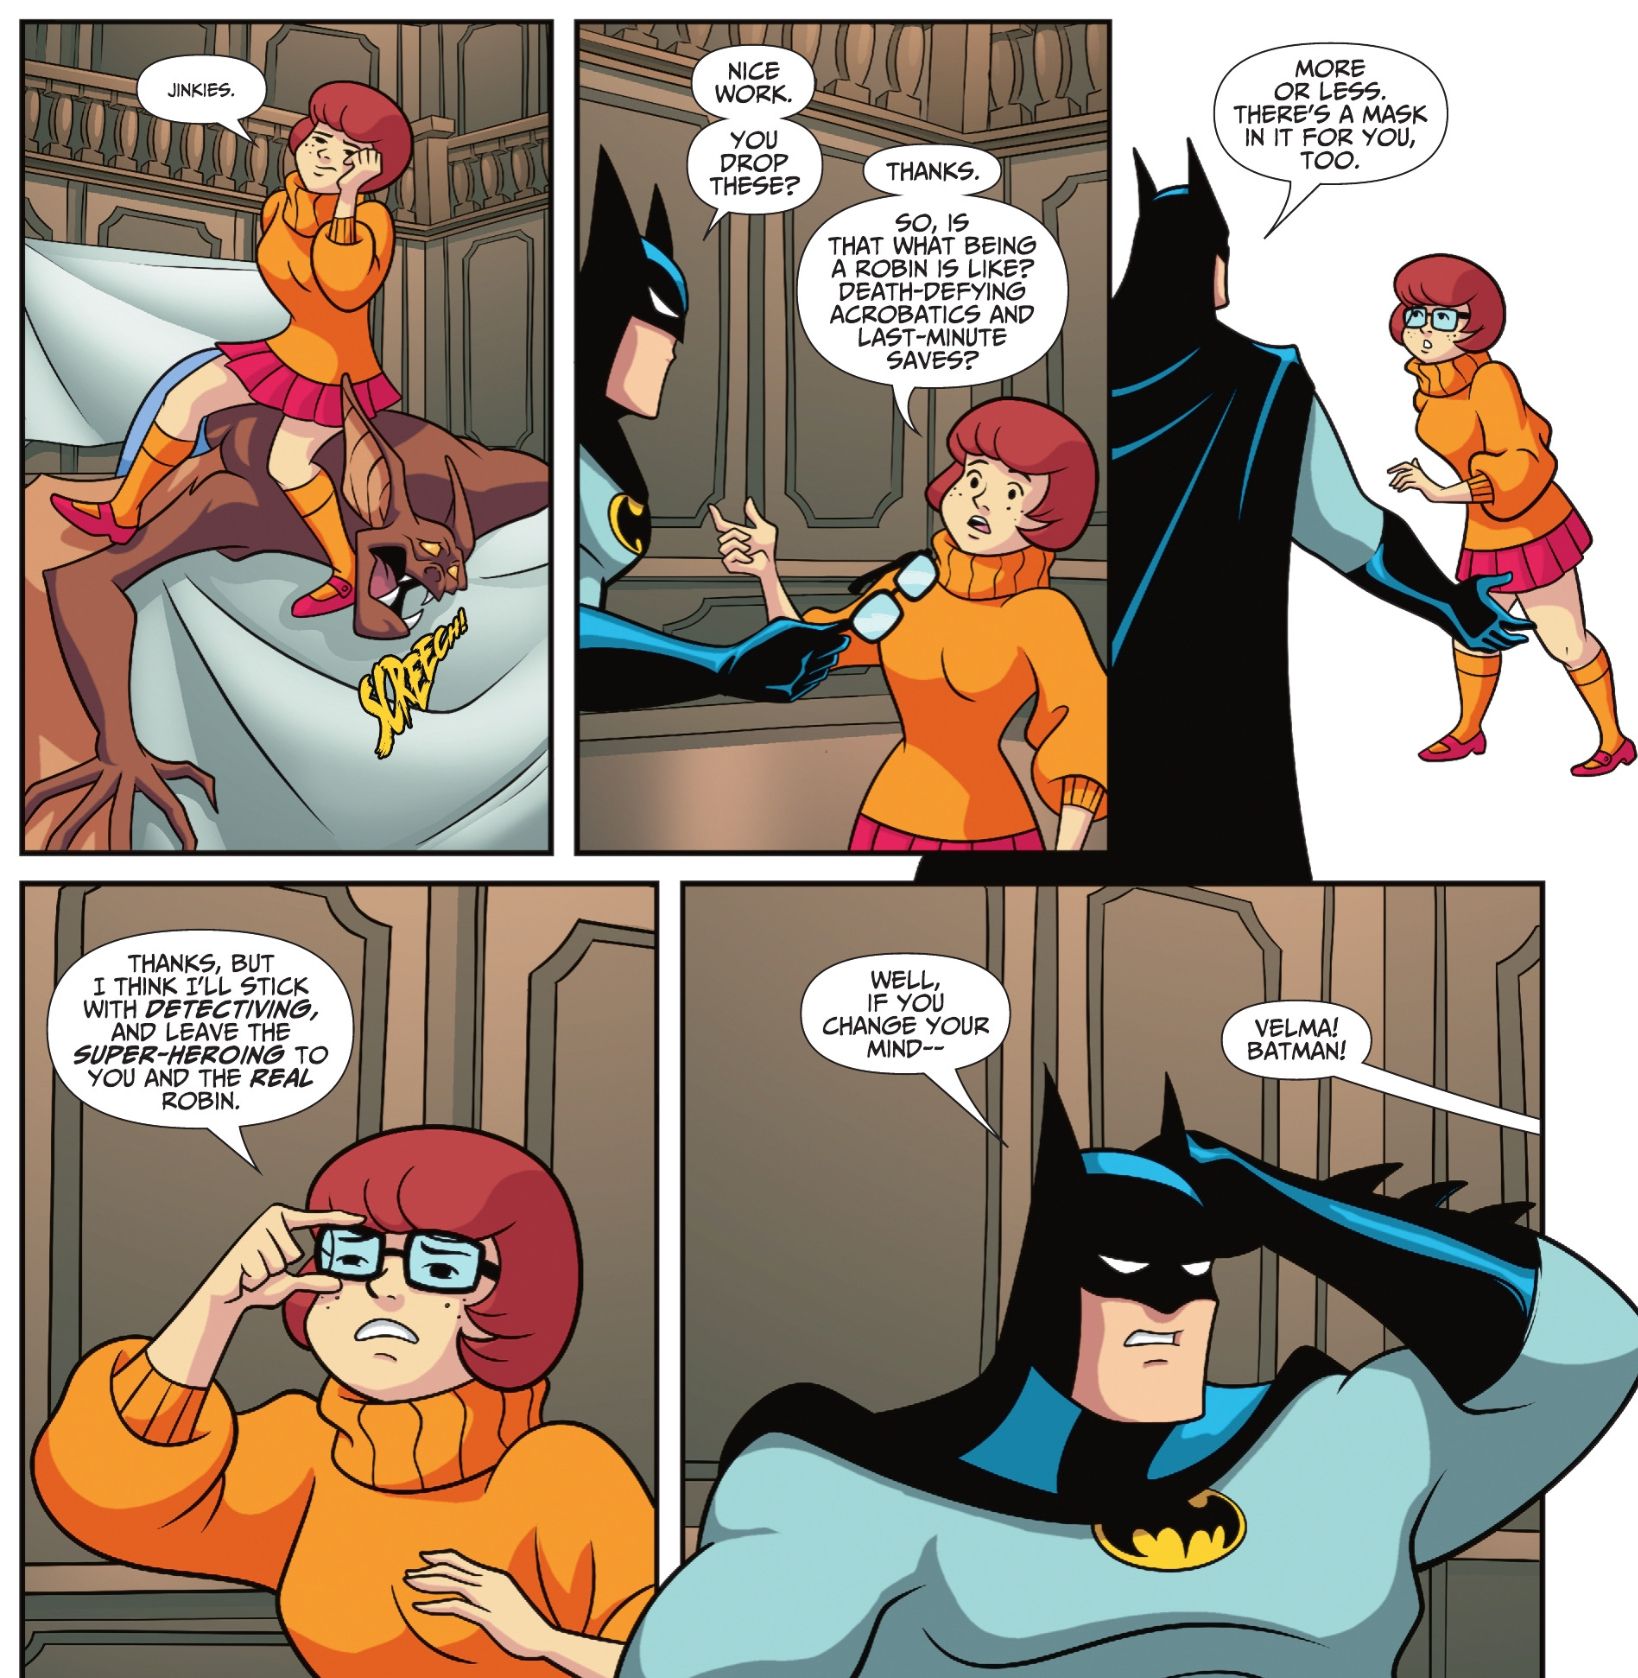 Velma rejeita a oferta de Batman para ser Robin, deixando Batman desapontado.